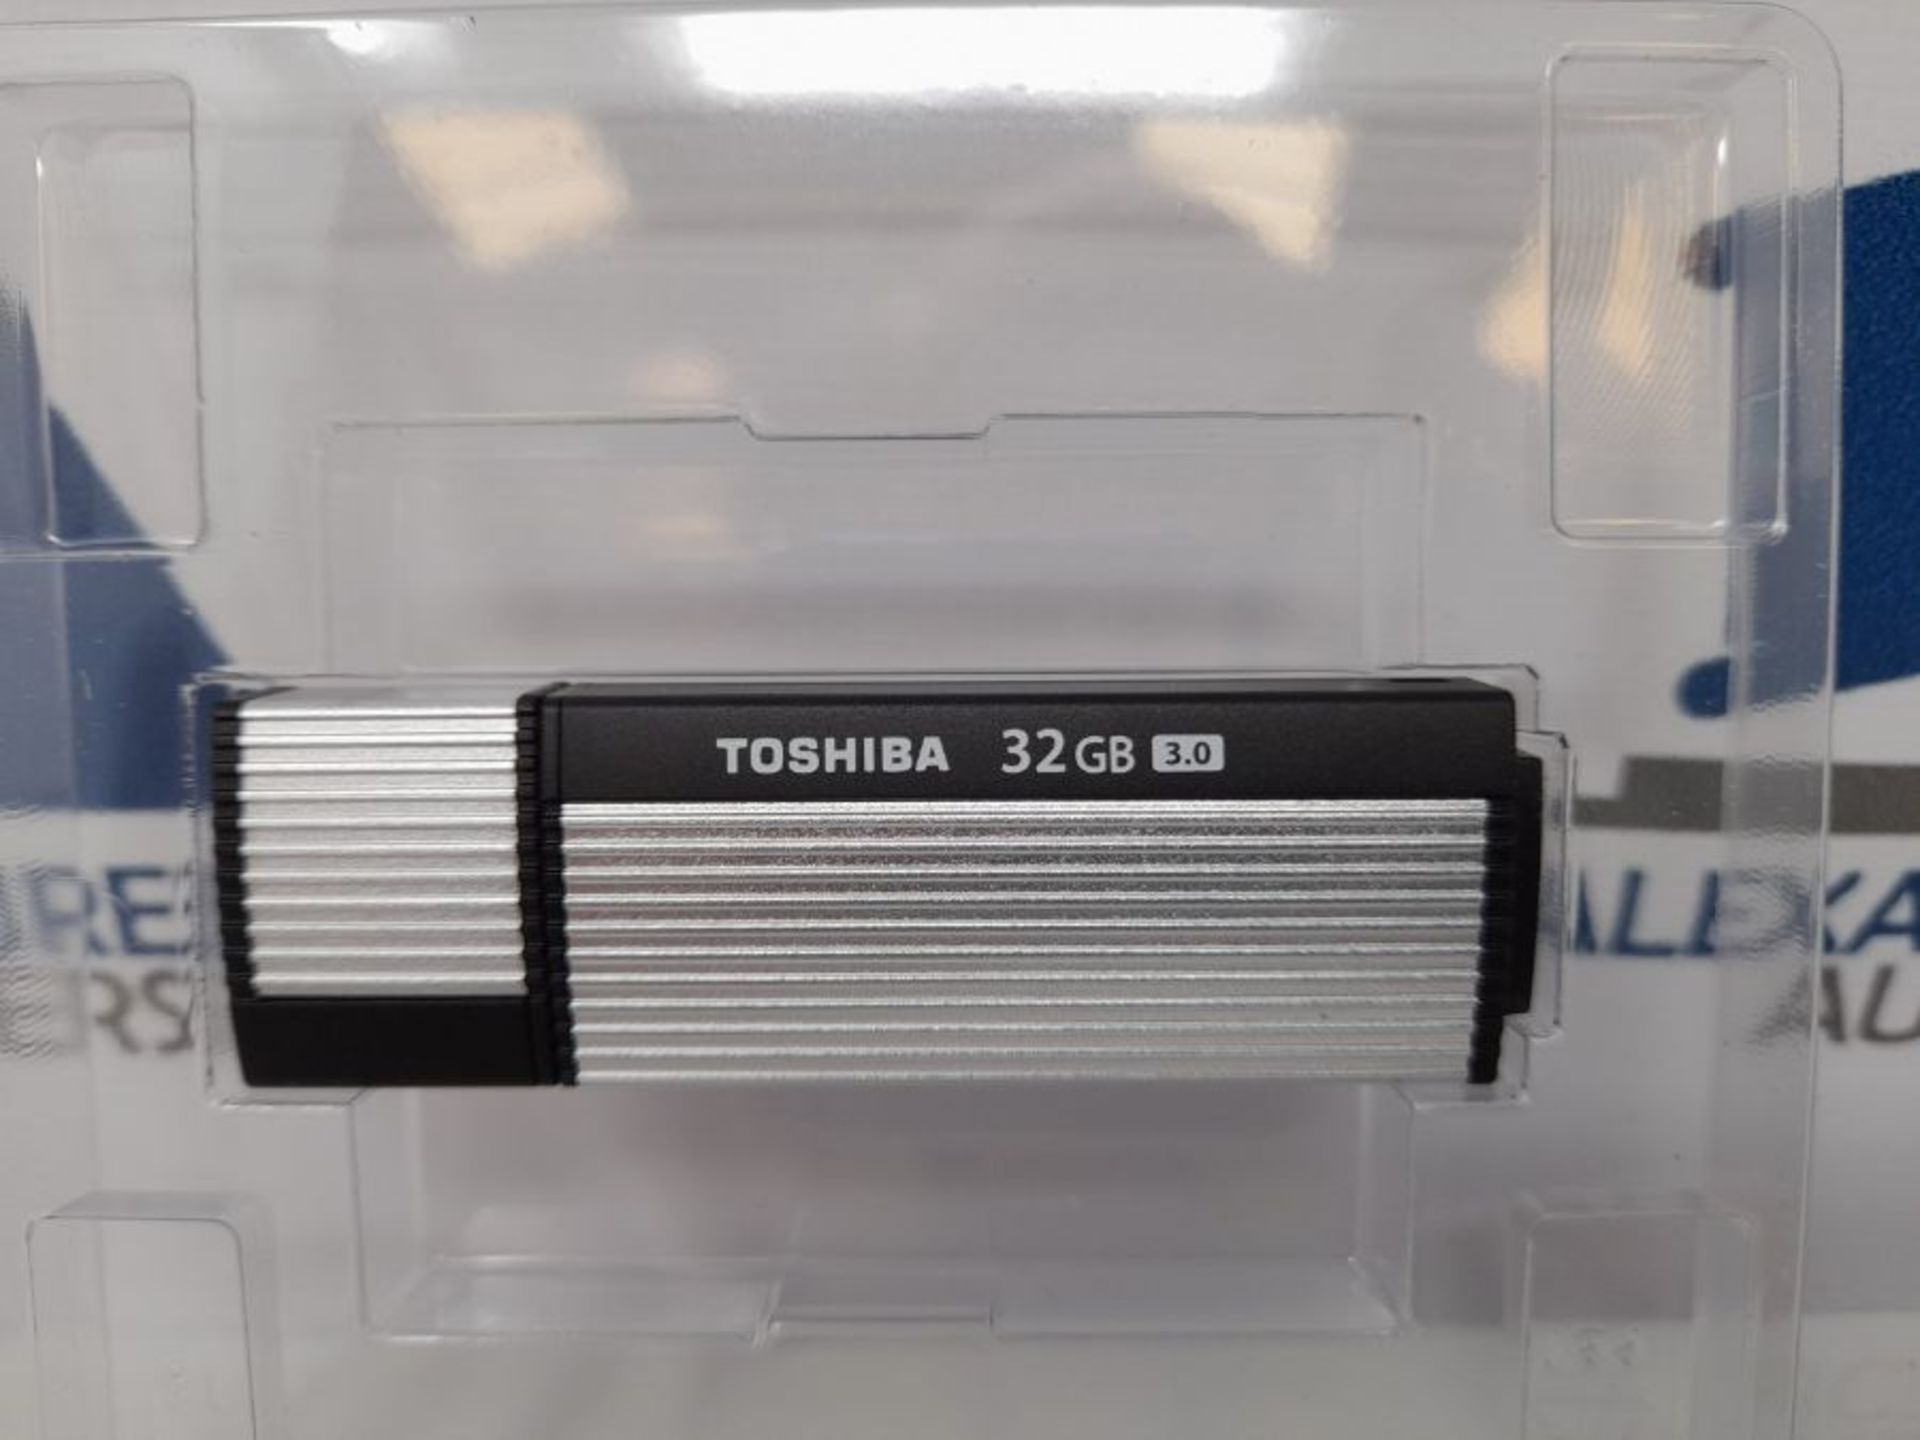 Toshiba Pendrive USB 3.0, 32 GB, Argento/Nero - Image 3 of 3